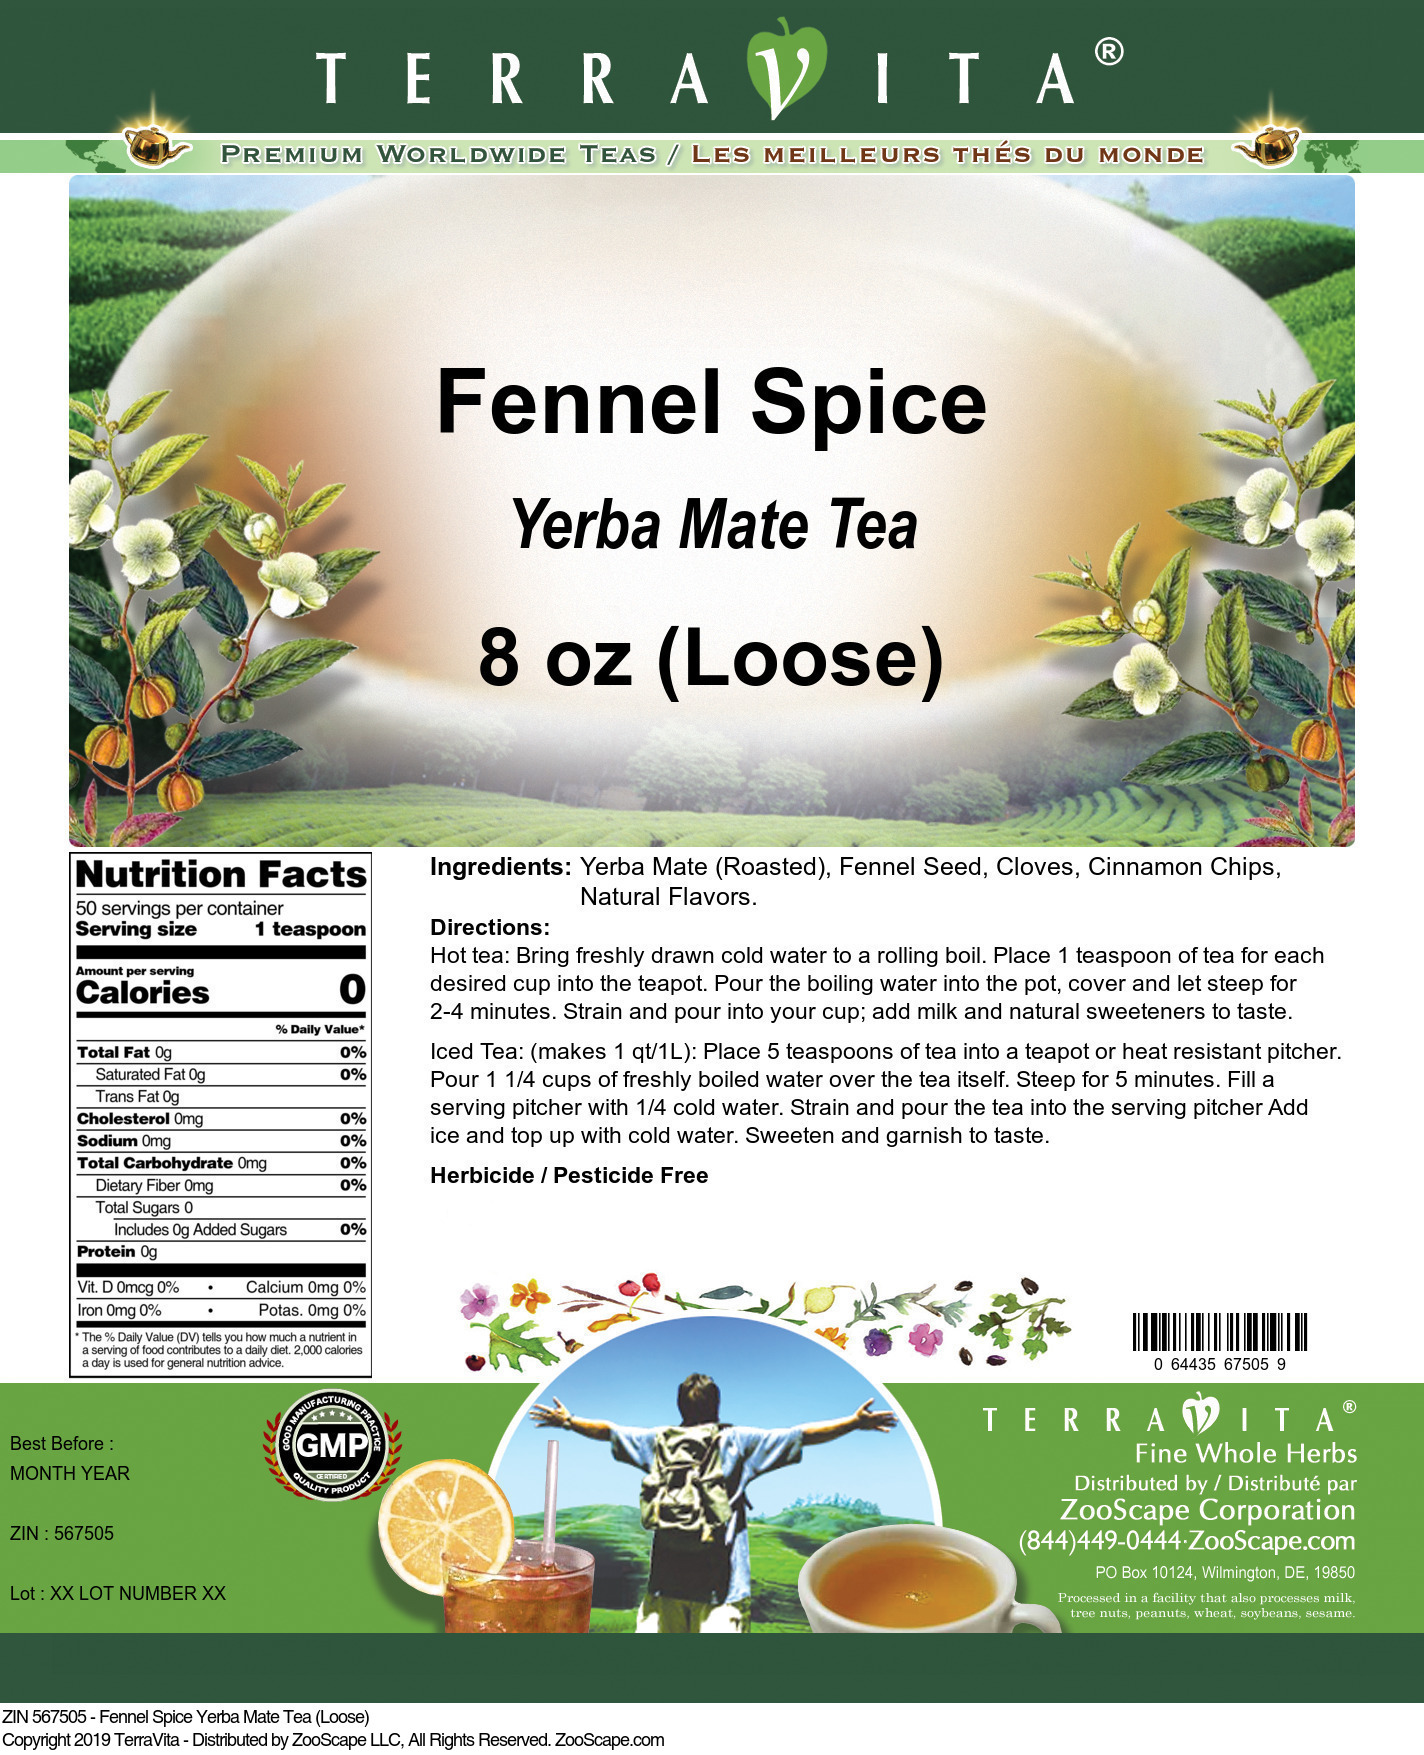 Fennel Spice Yerba Mate Tea (Loose) - Label